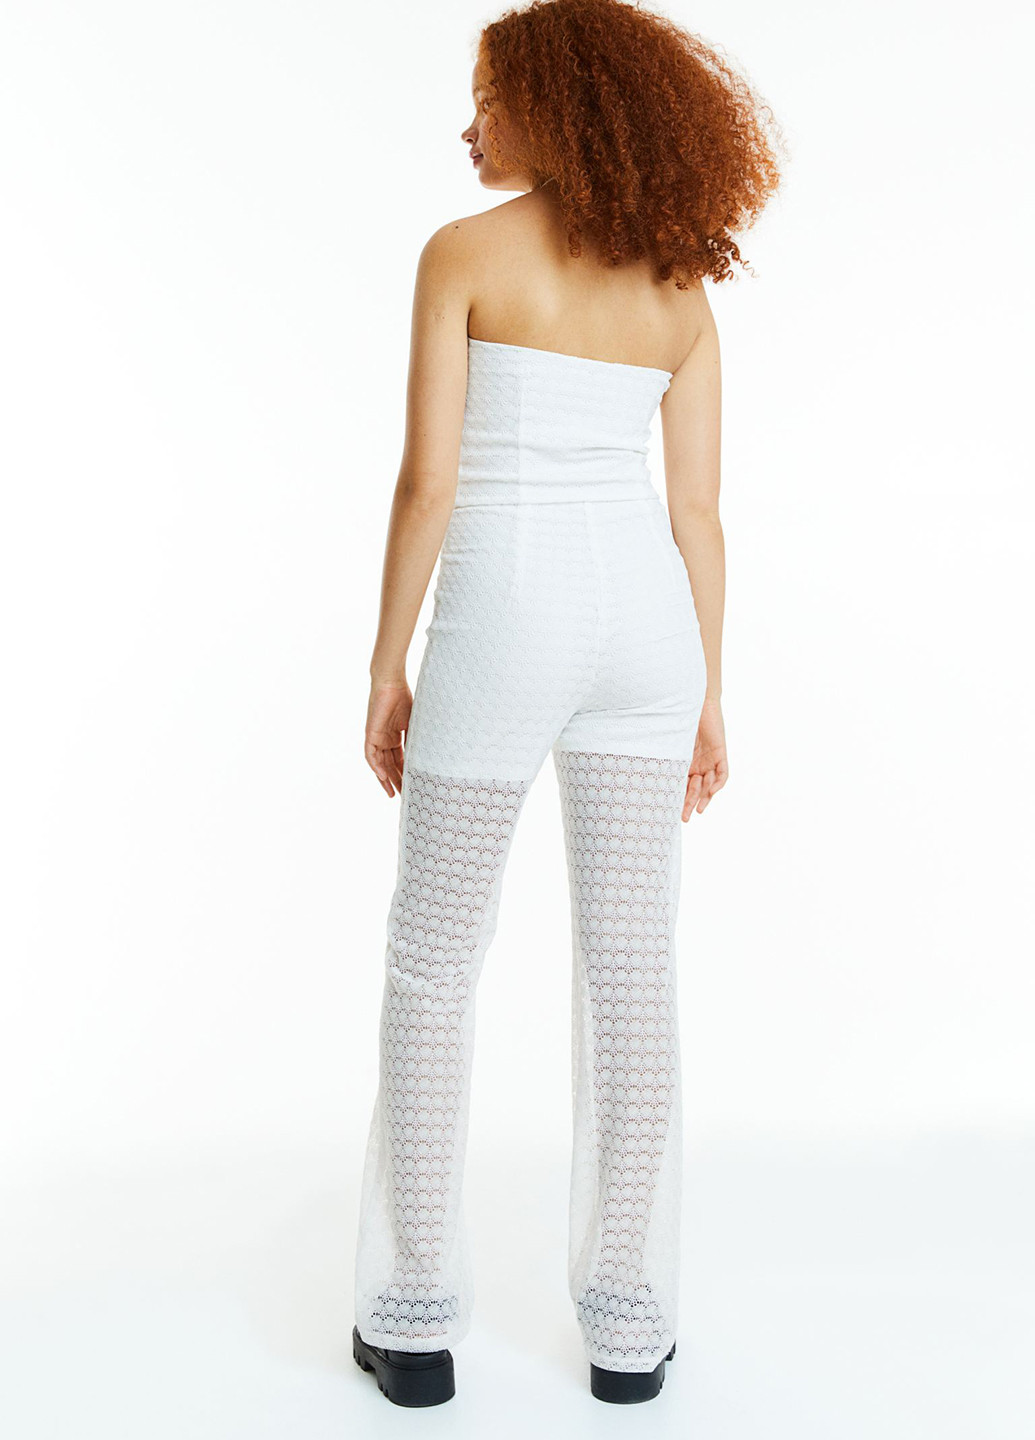 Комбинезон H&M комбинезон-брюки однотонный белый кэжуал полиэстер